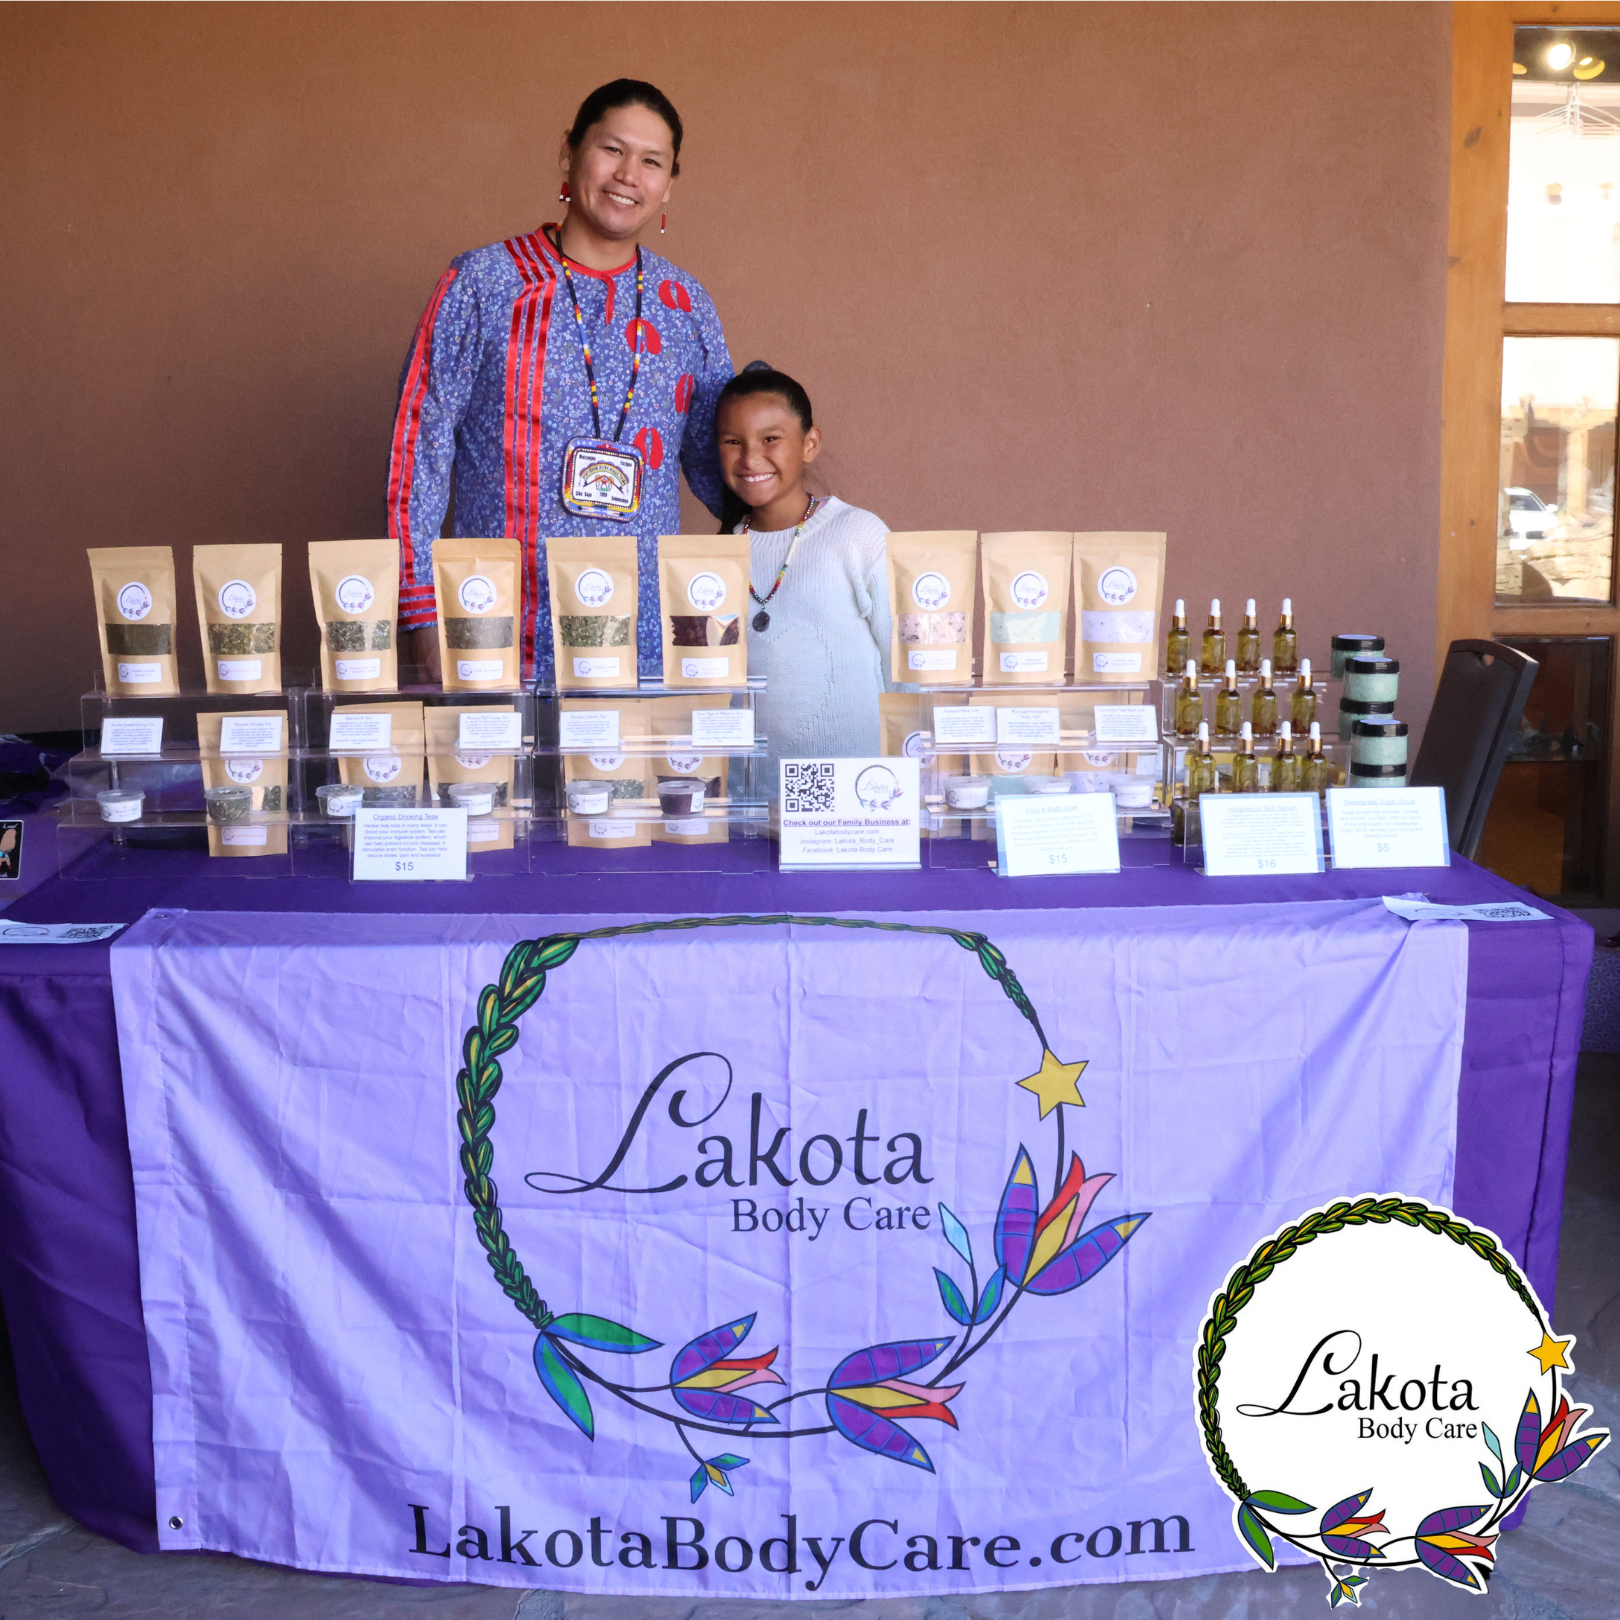 Haleakala Brown &amp; Lakota Body Care